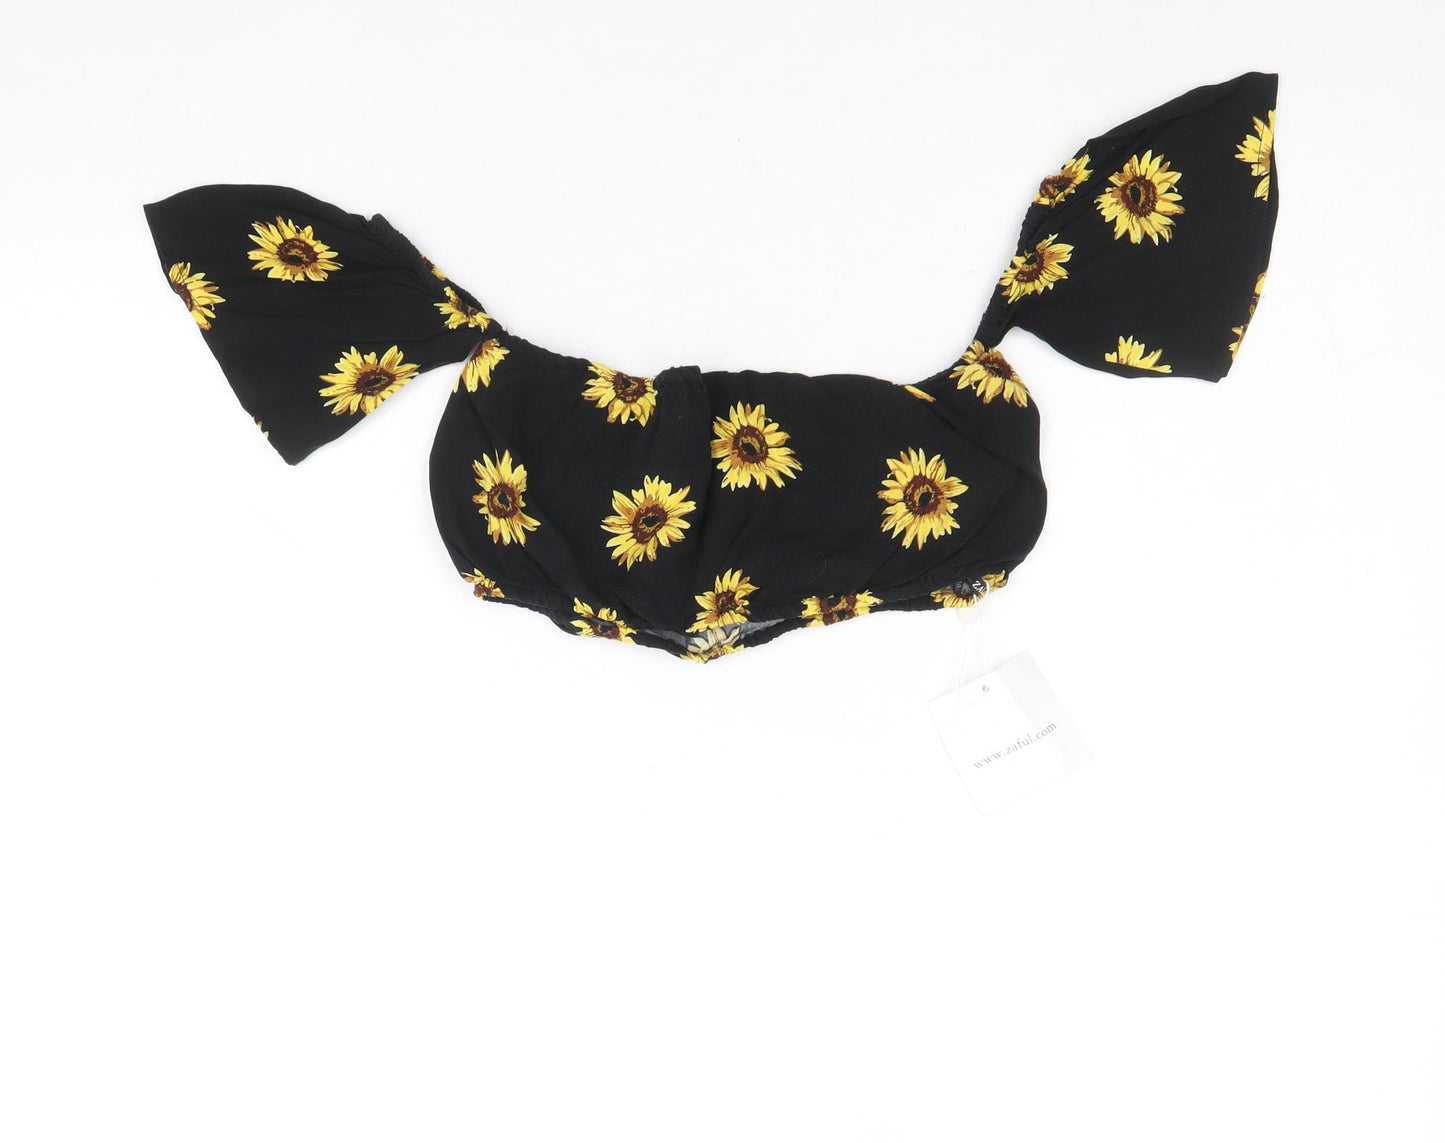 Zaful Womens Black Floral Viscose Cropped Blouse Size M Off the Shoulder - Sunflower Bardot